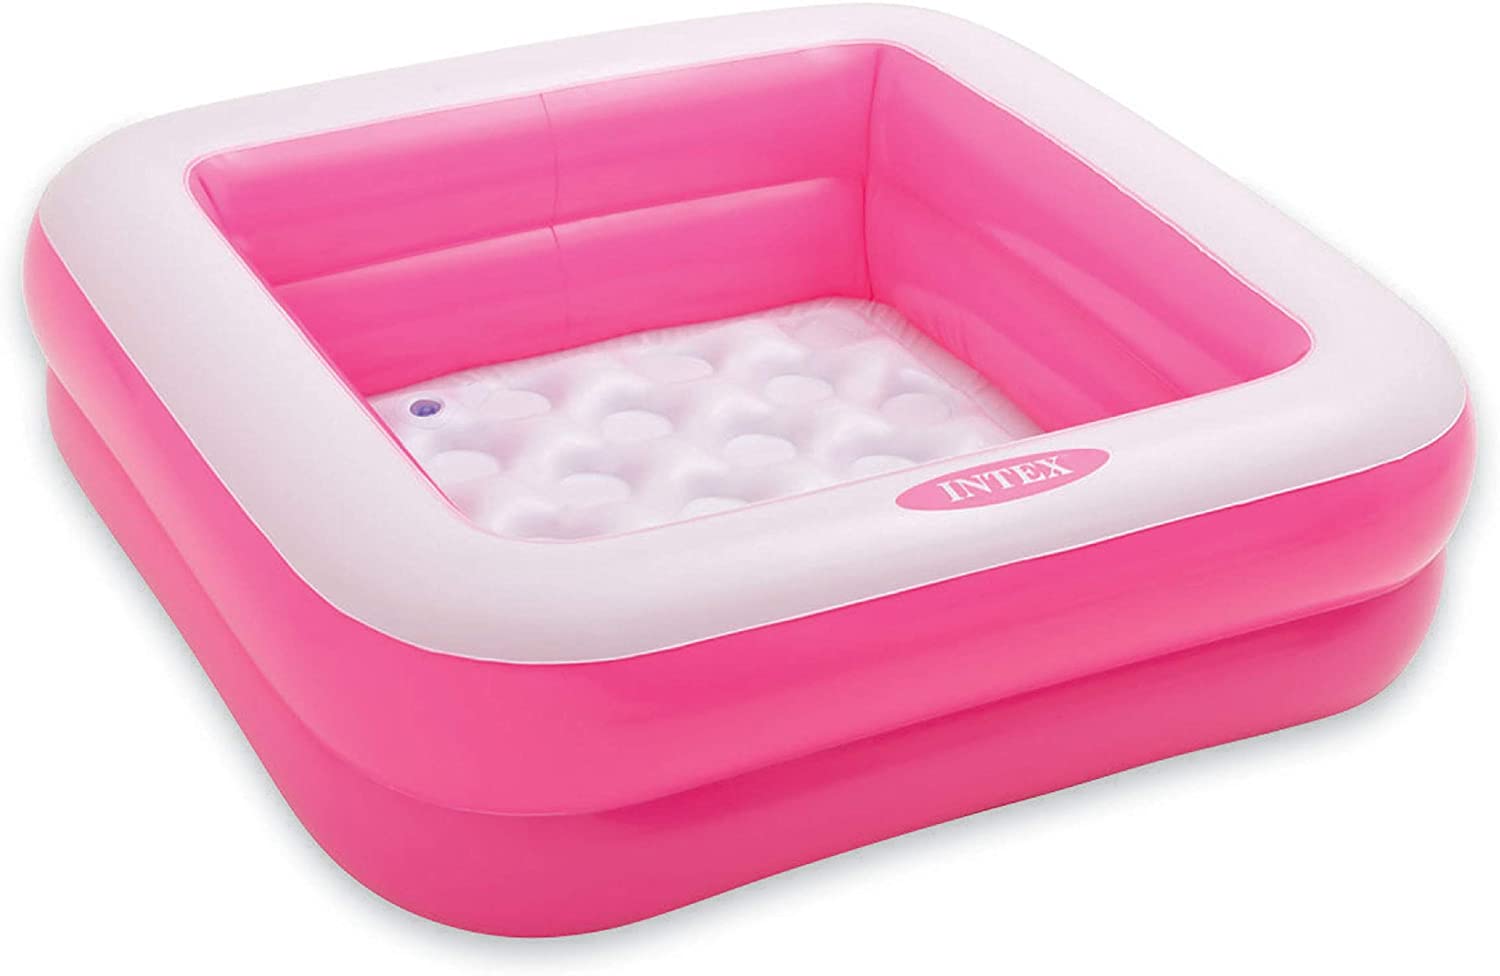 Intex Square Baby Pool - Pink